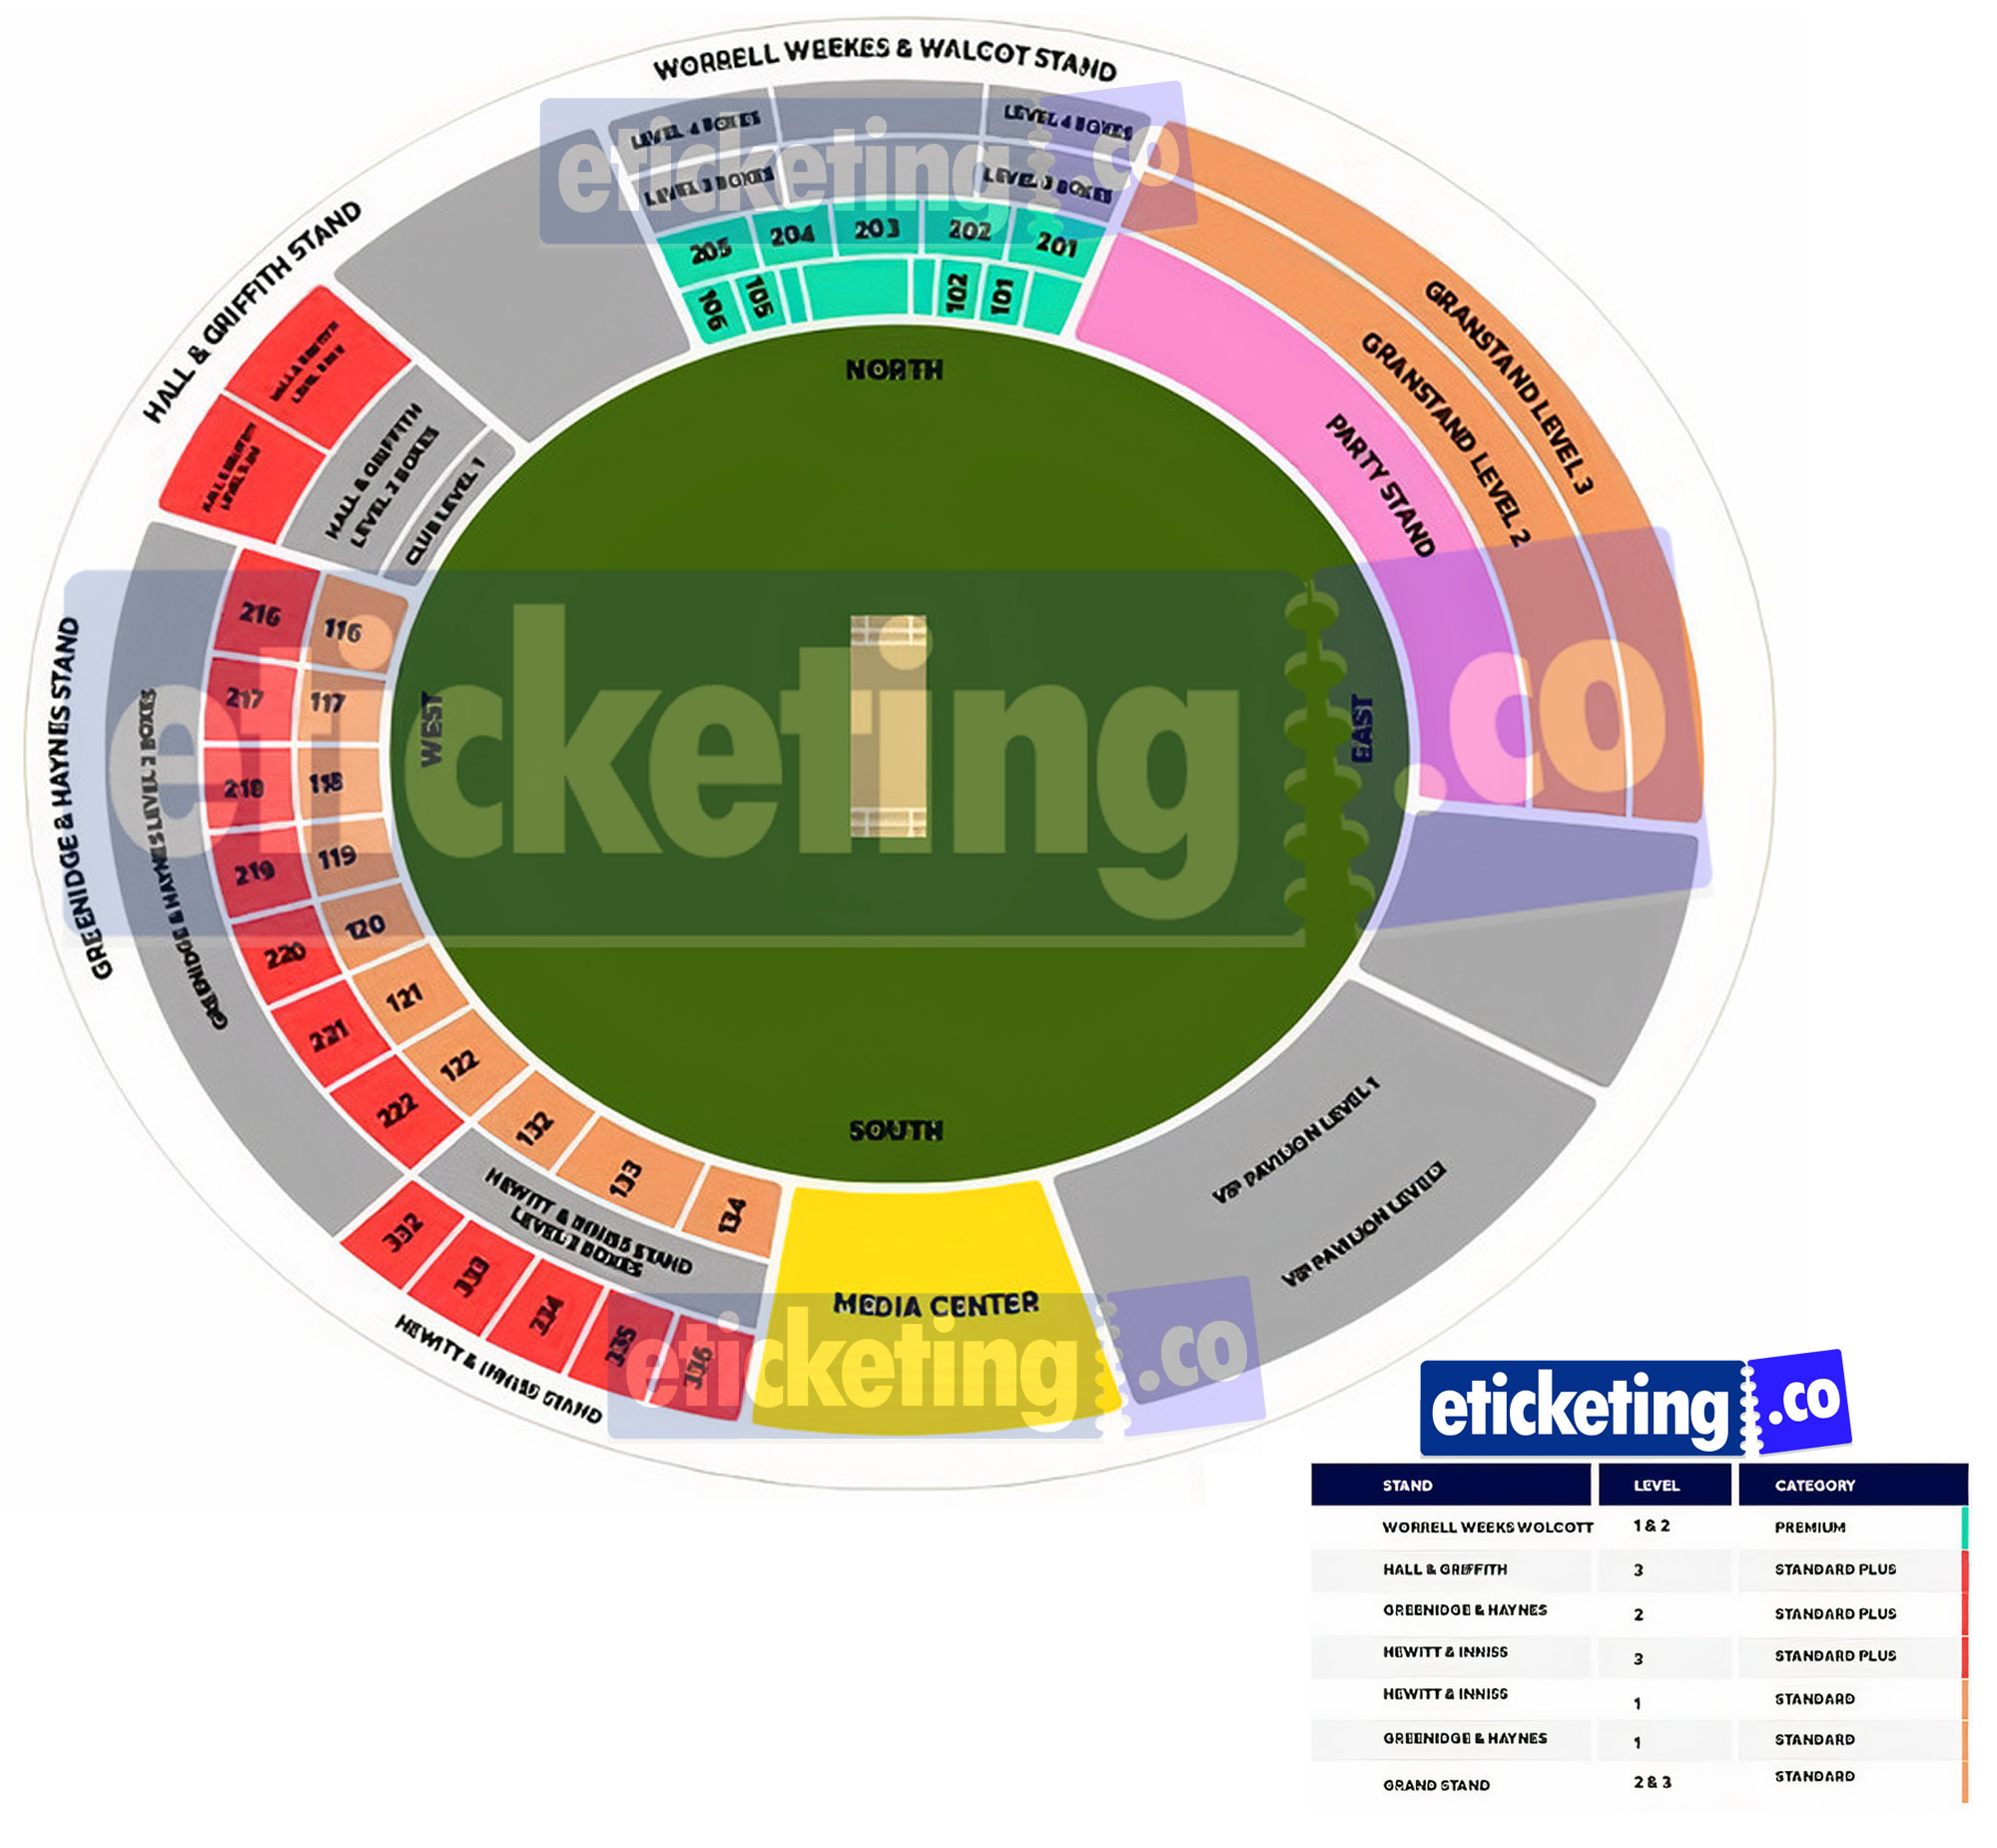 Kensington Oval West Indies vs England 3rd ODI Venue Seating Plan